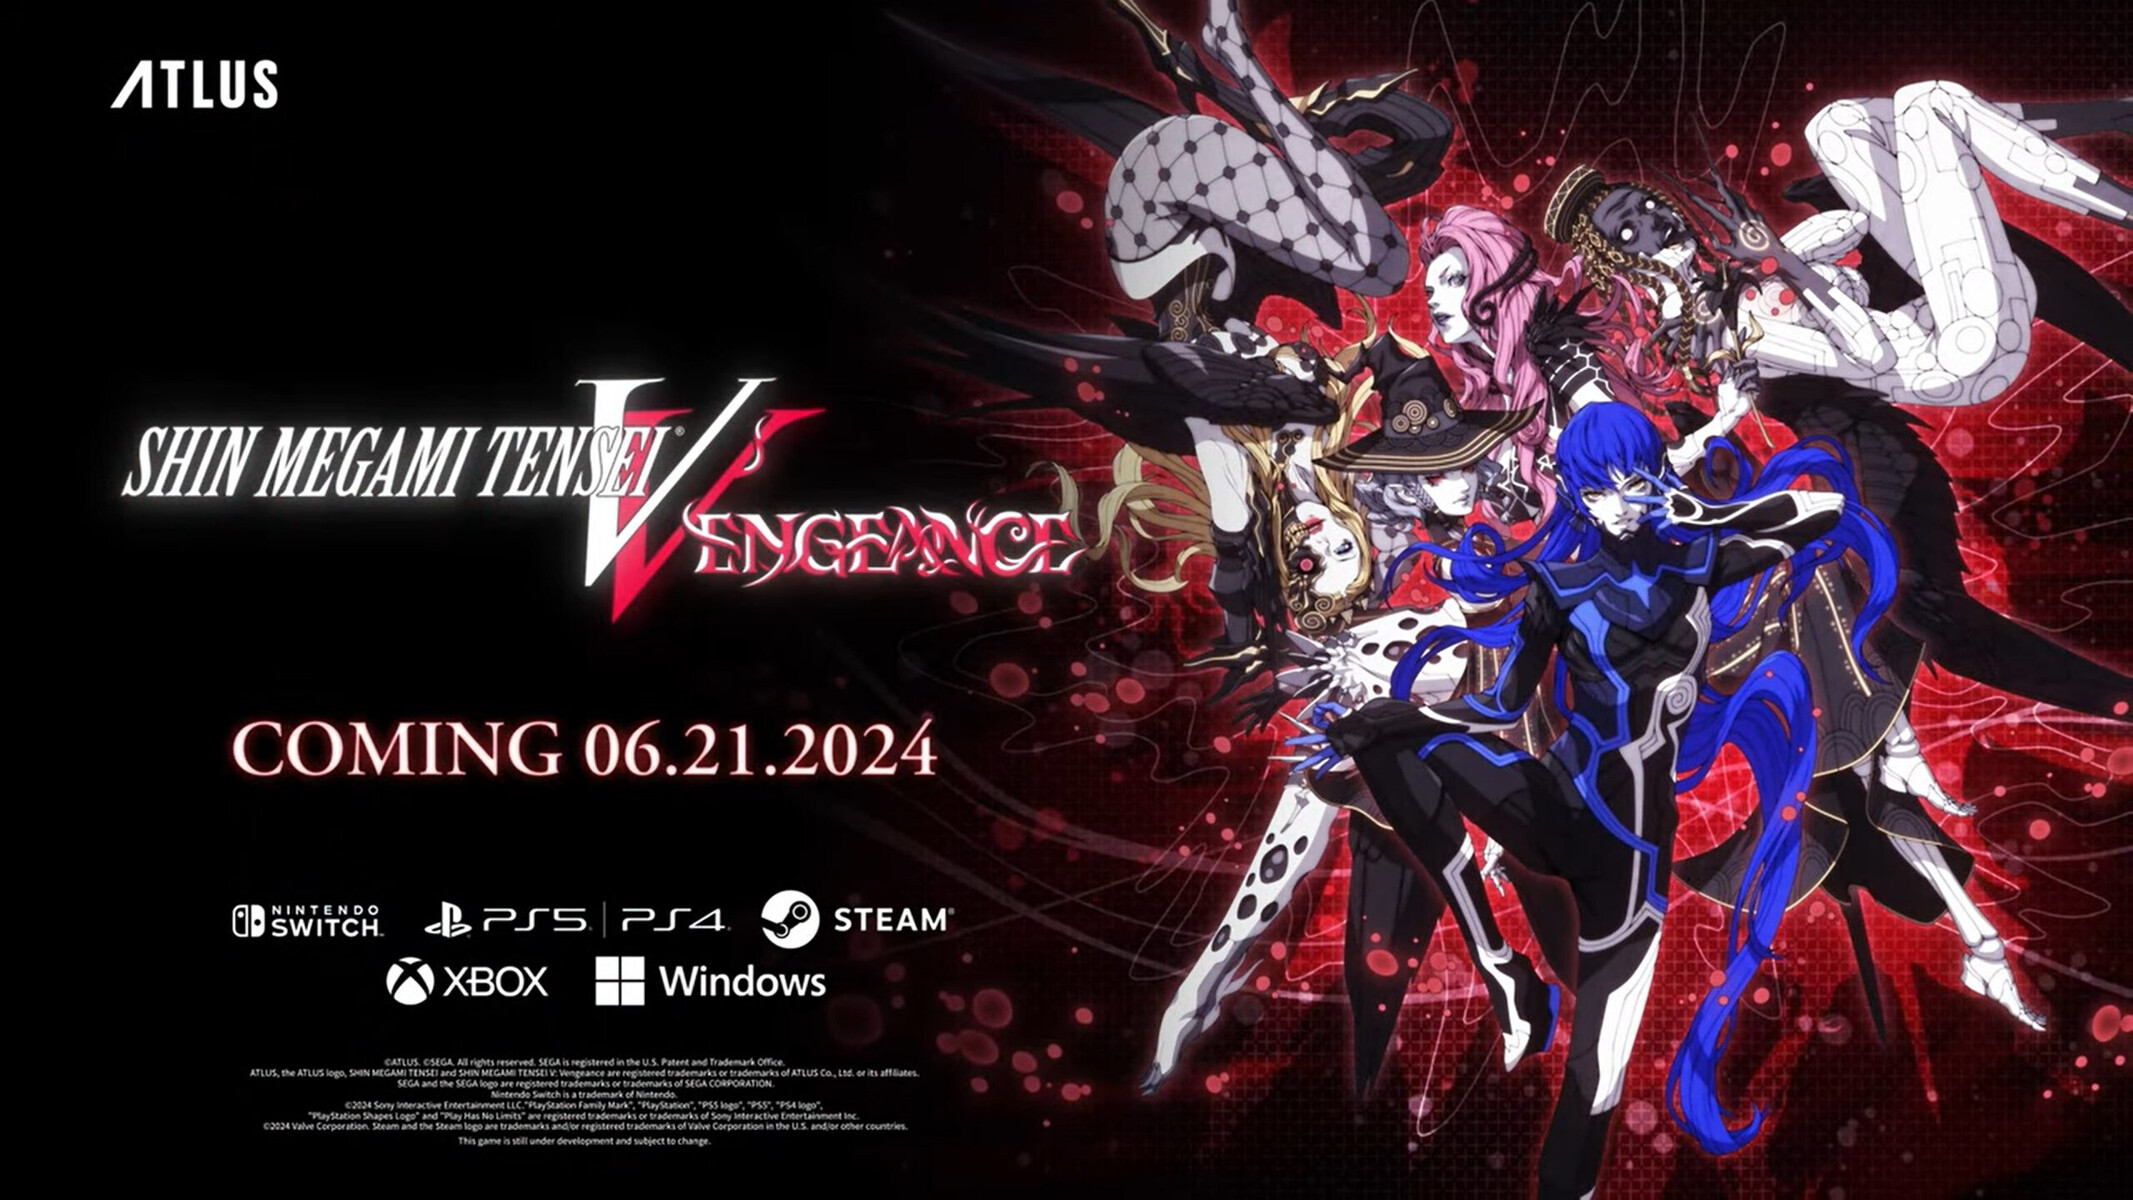 Atlus Shares Shin Megami Tensei V: Vengeance Story Details